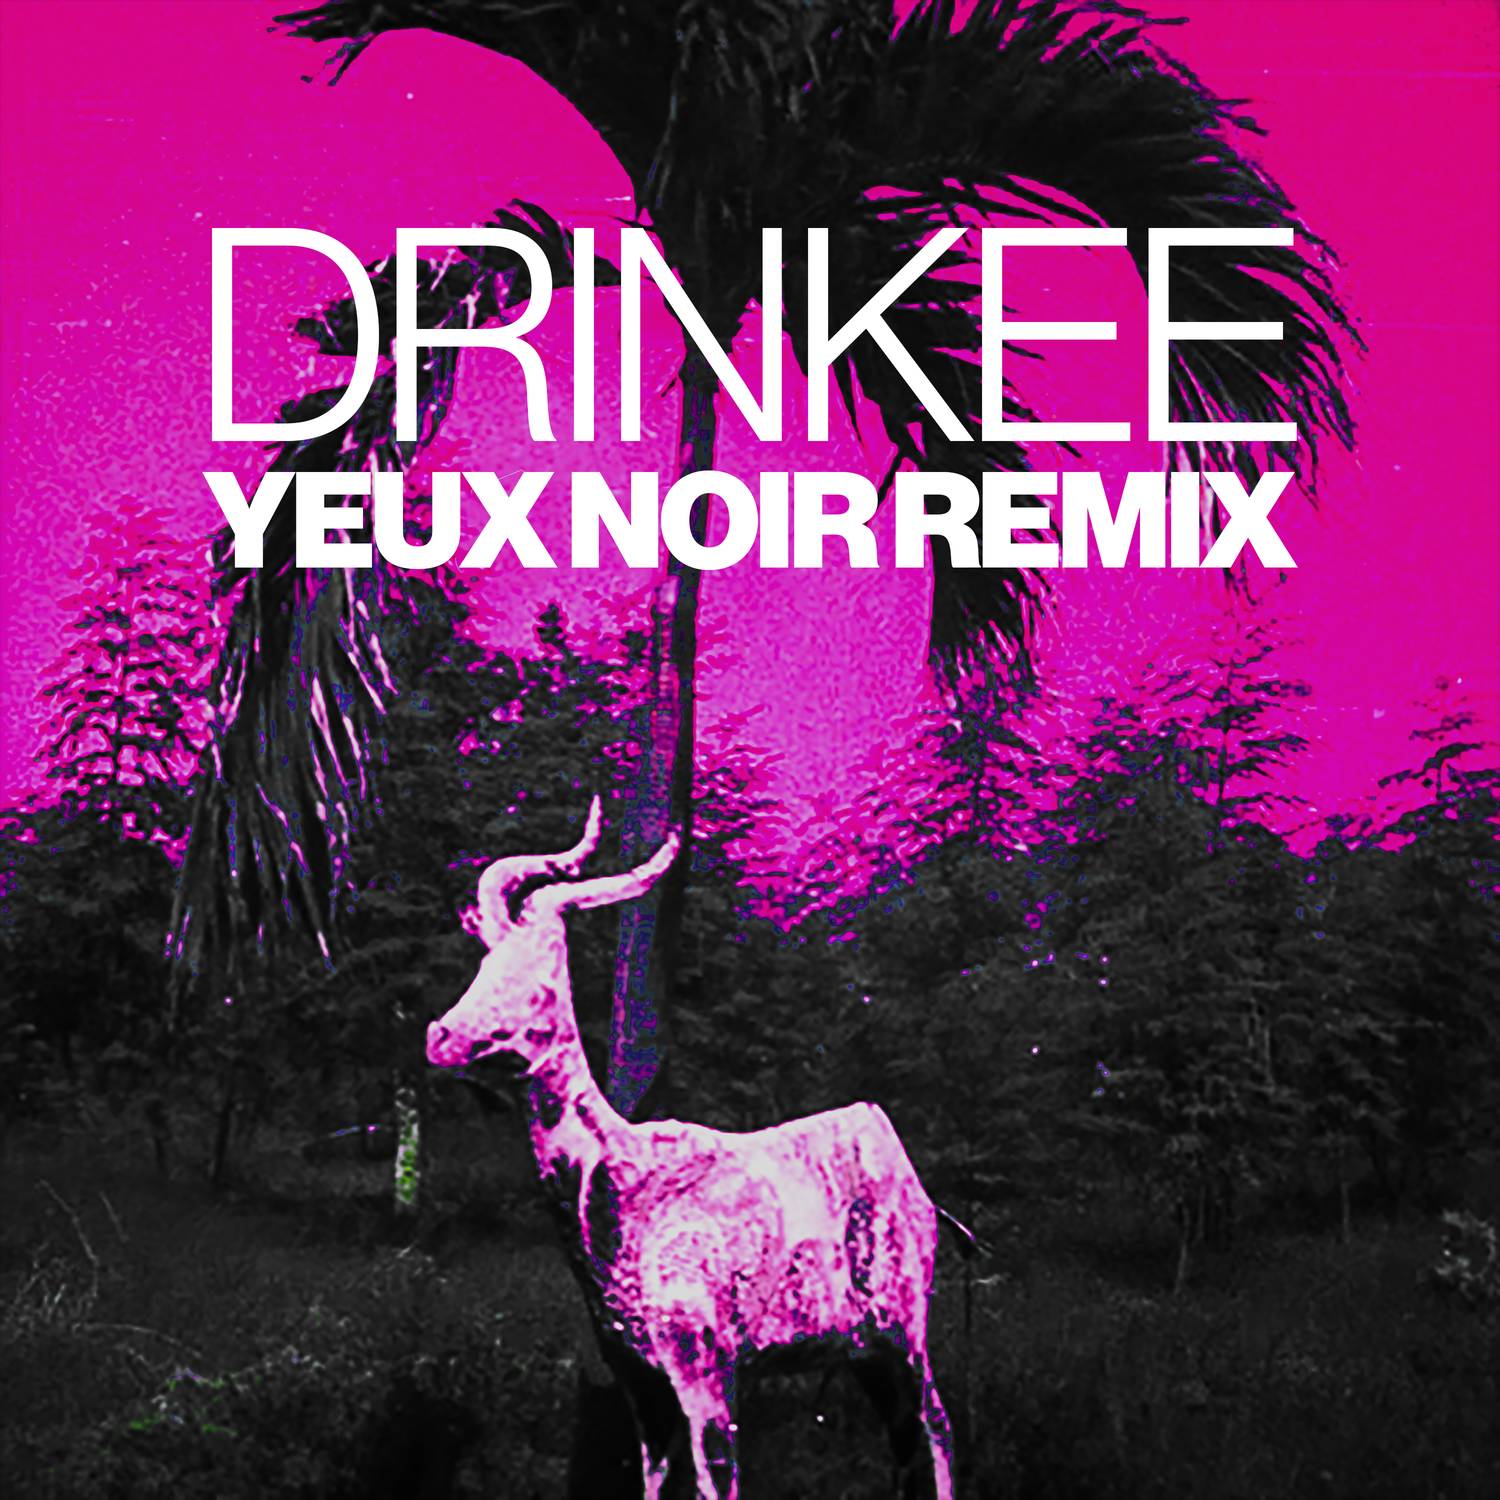 Drinkee (Yeux Noir Remix)